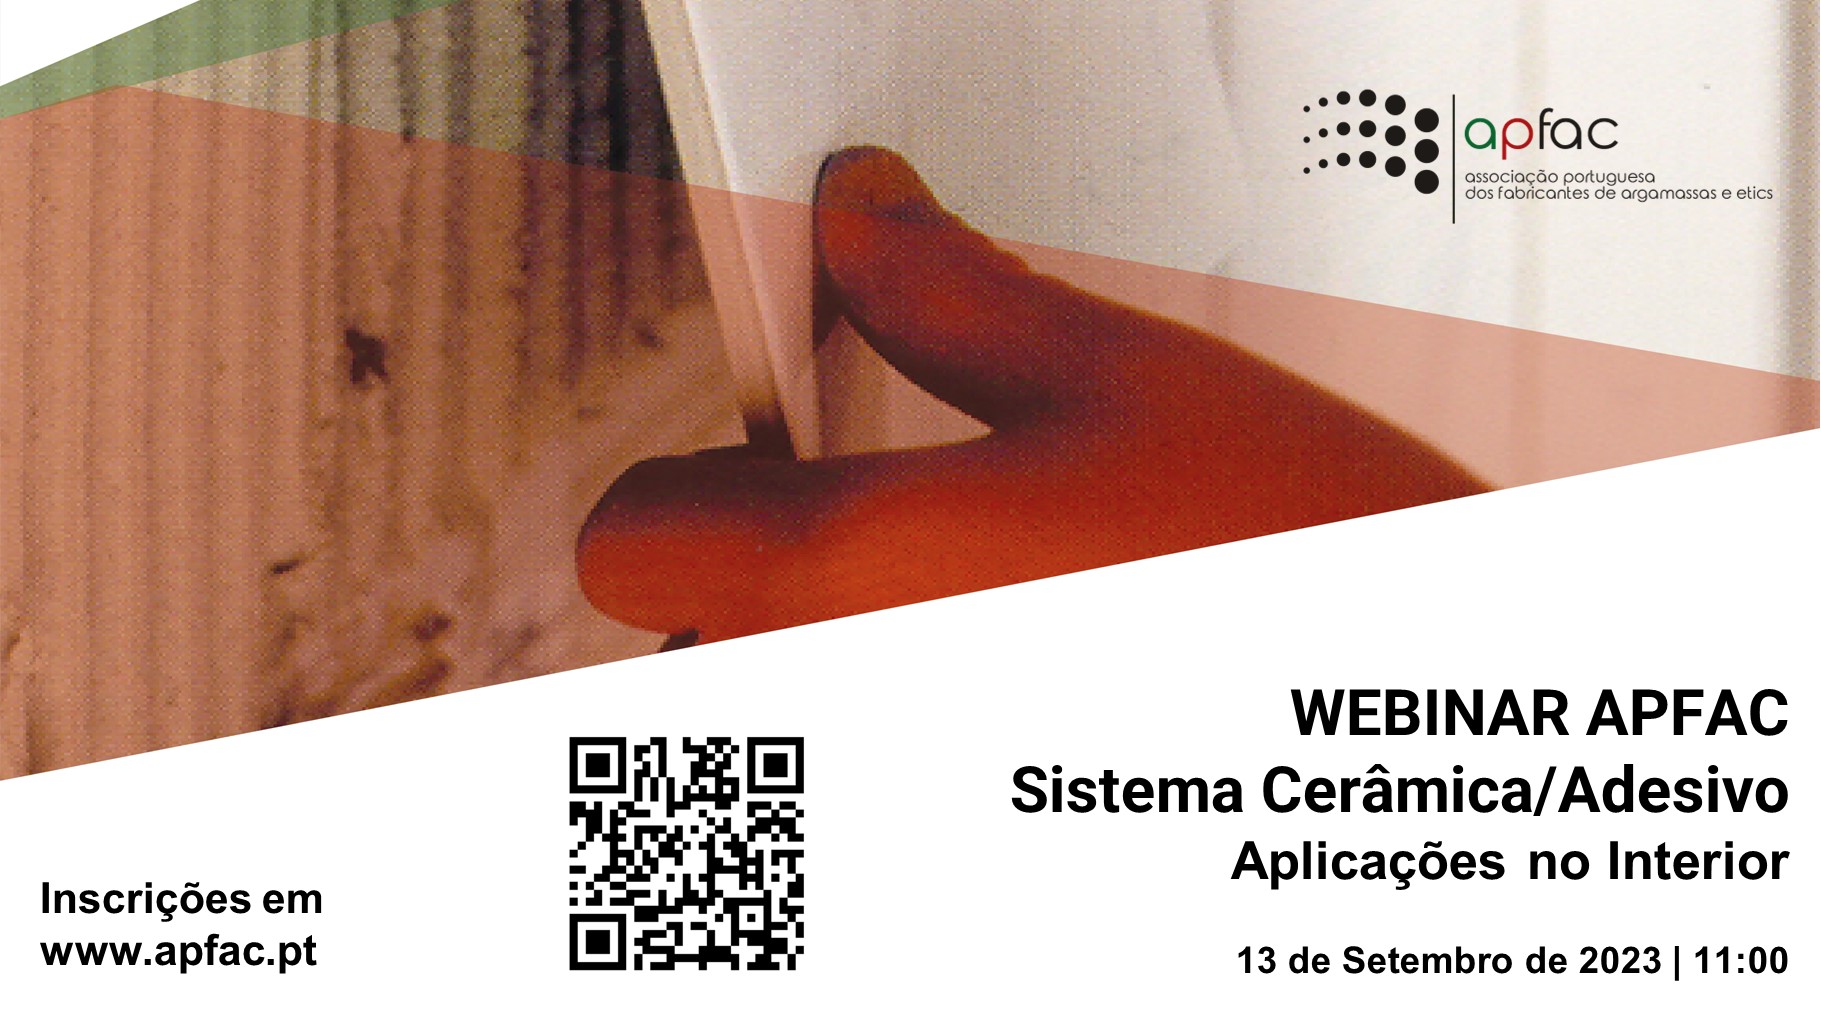 WEBINARS APFAC - SISTEMA CERÂMICA/ADESIVO